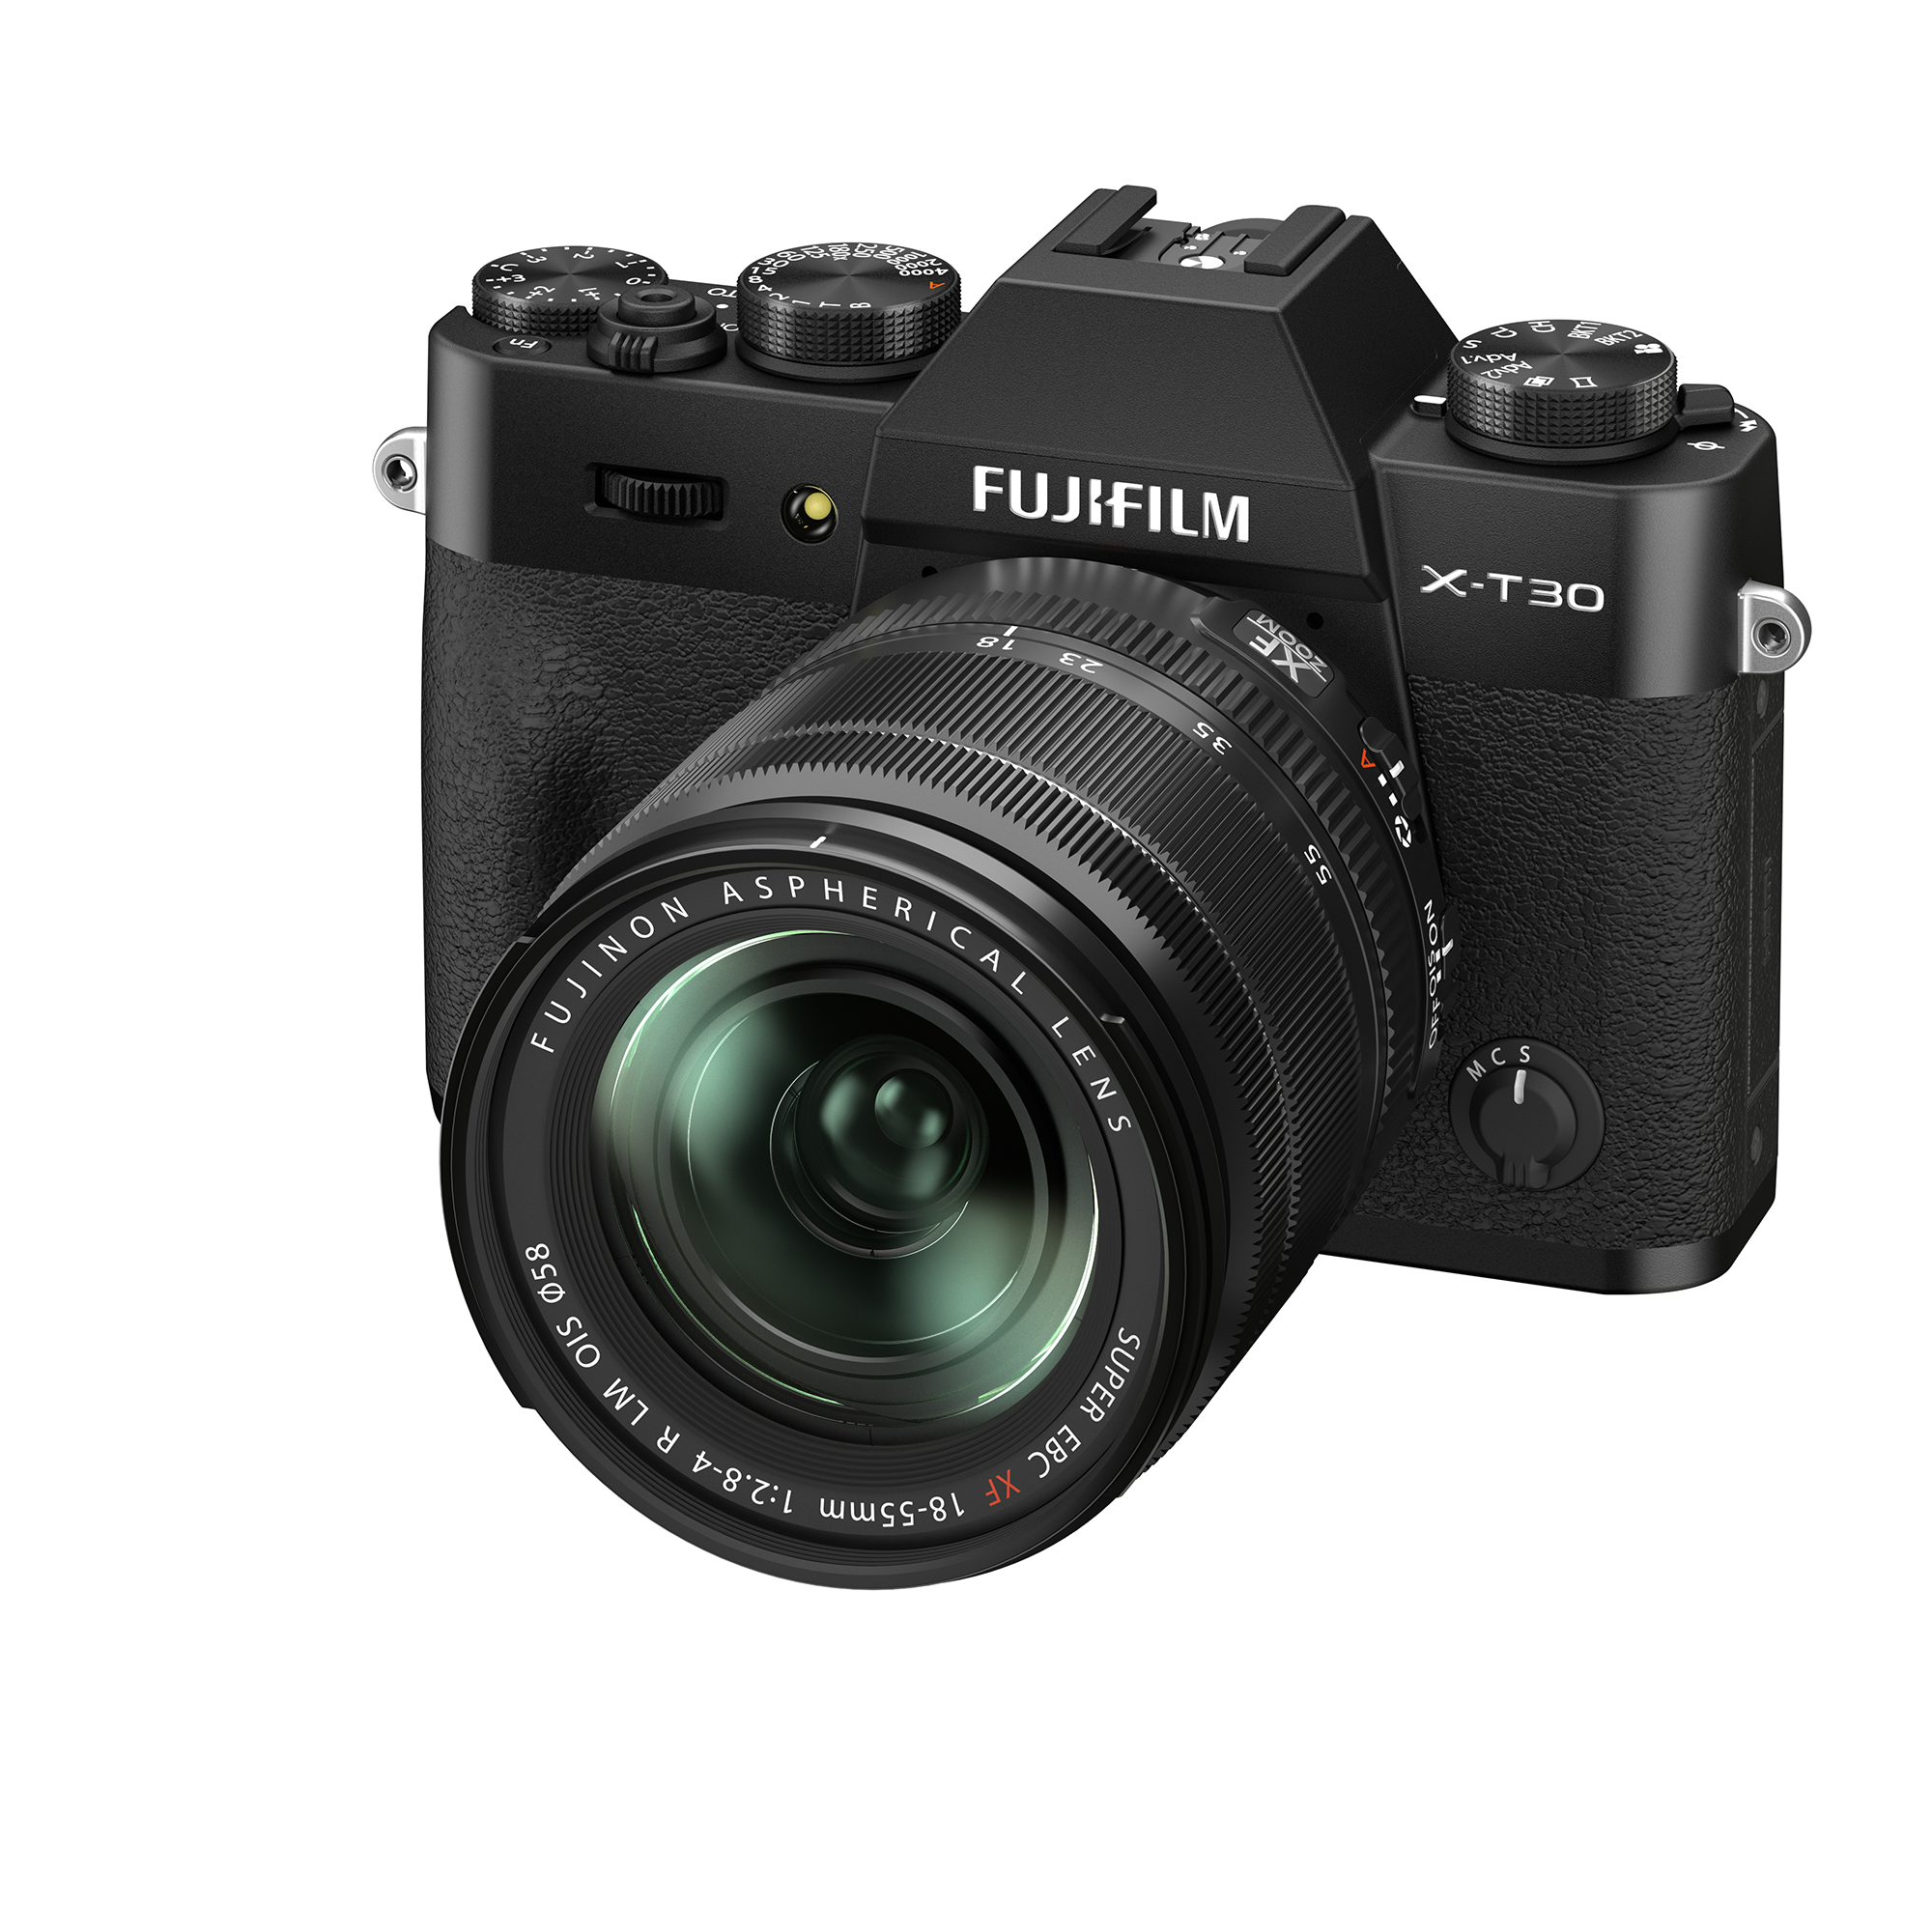 FUJIFILM X-T30 II Mirrorless Camera Body, with XF18-55mm Lens Kit,